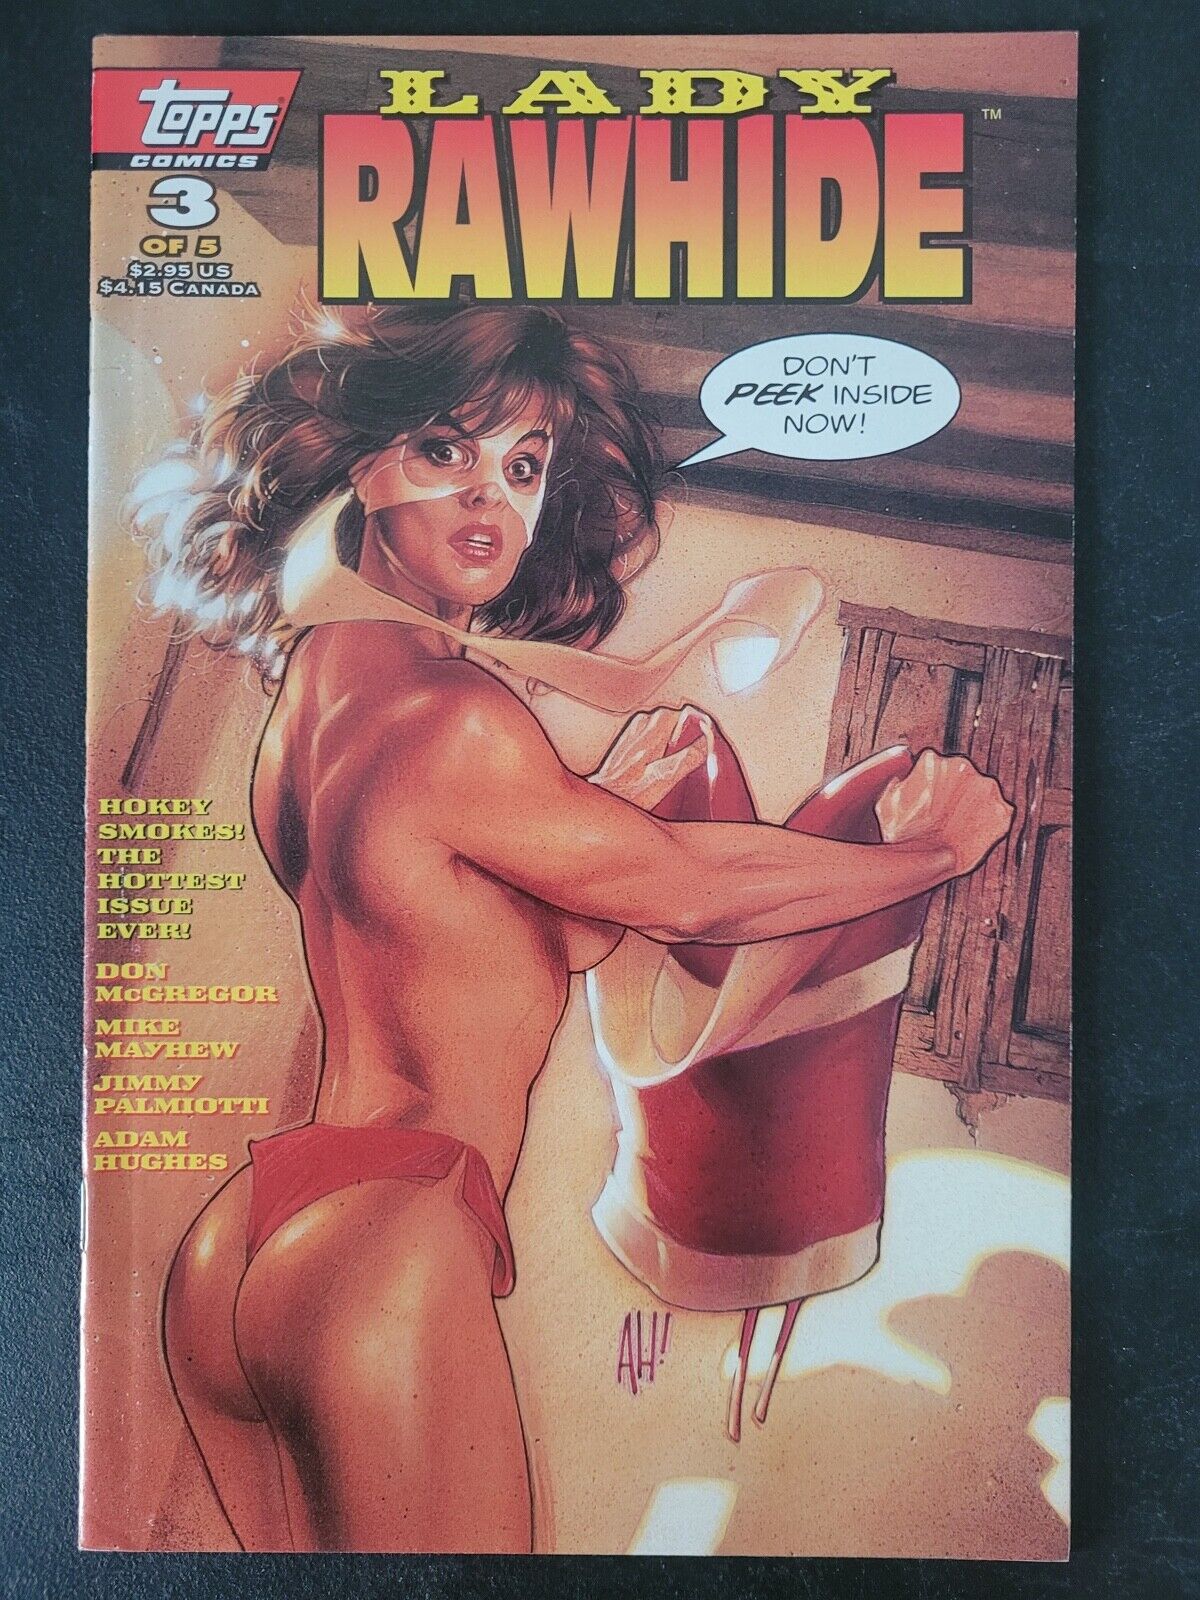 LADY RAWHIDE #3 (1995) TOPPS COMICS MIKE MAYHEW AMAZING SEXY ADAM HUGHES COVER